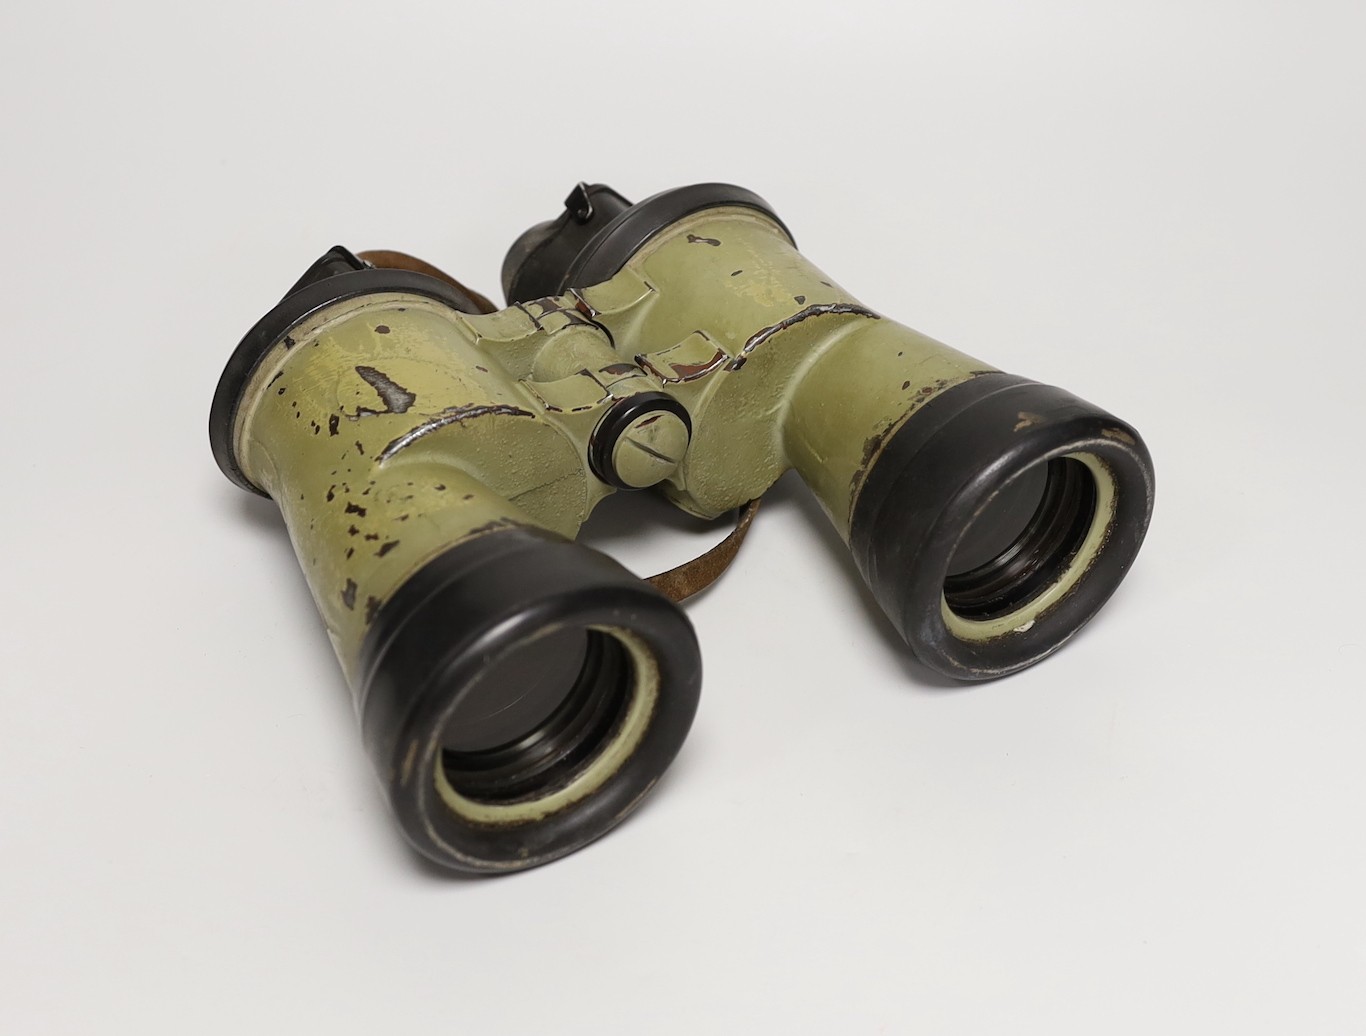 A pair of WWII German U boat binoculars, blc 7 x 50 serial no. 55429, rubber mounts, 19cms long